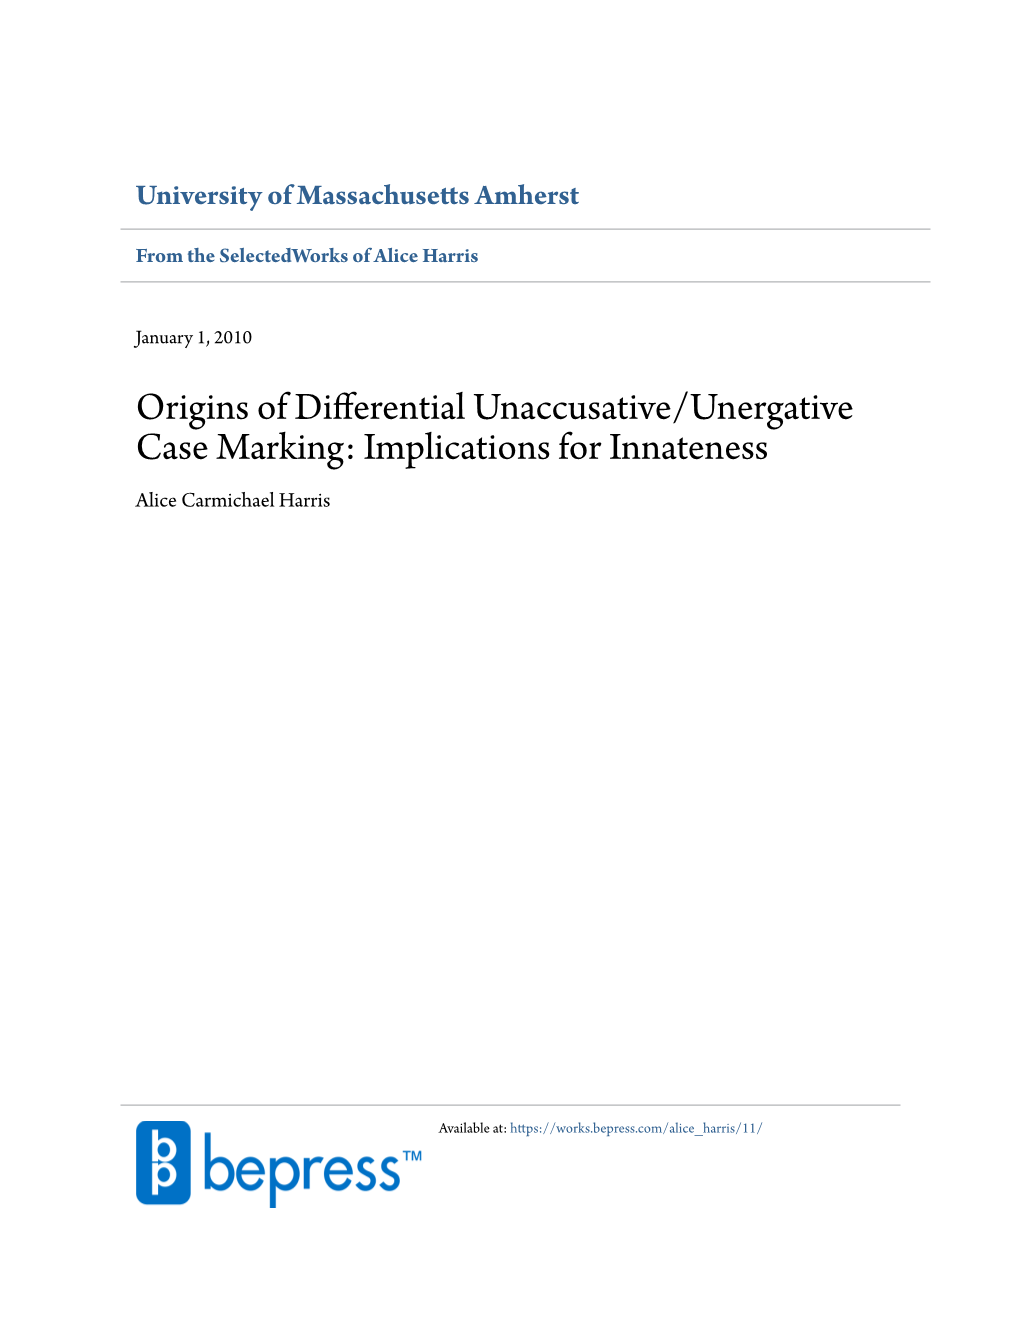 Origins of Differential Unaccusative/Unergative Case Marking: Implications for Innateness Alice Carmichael Harris